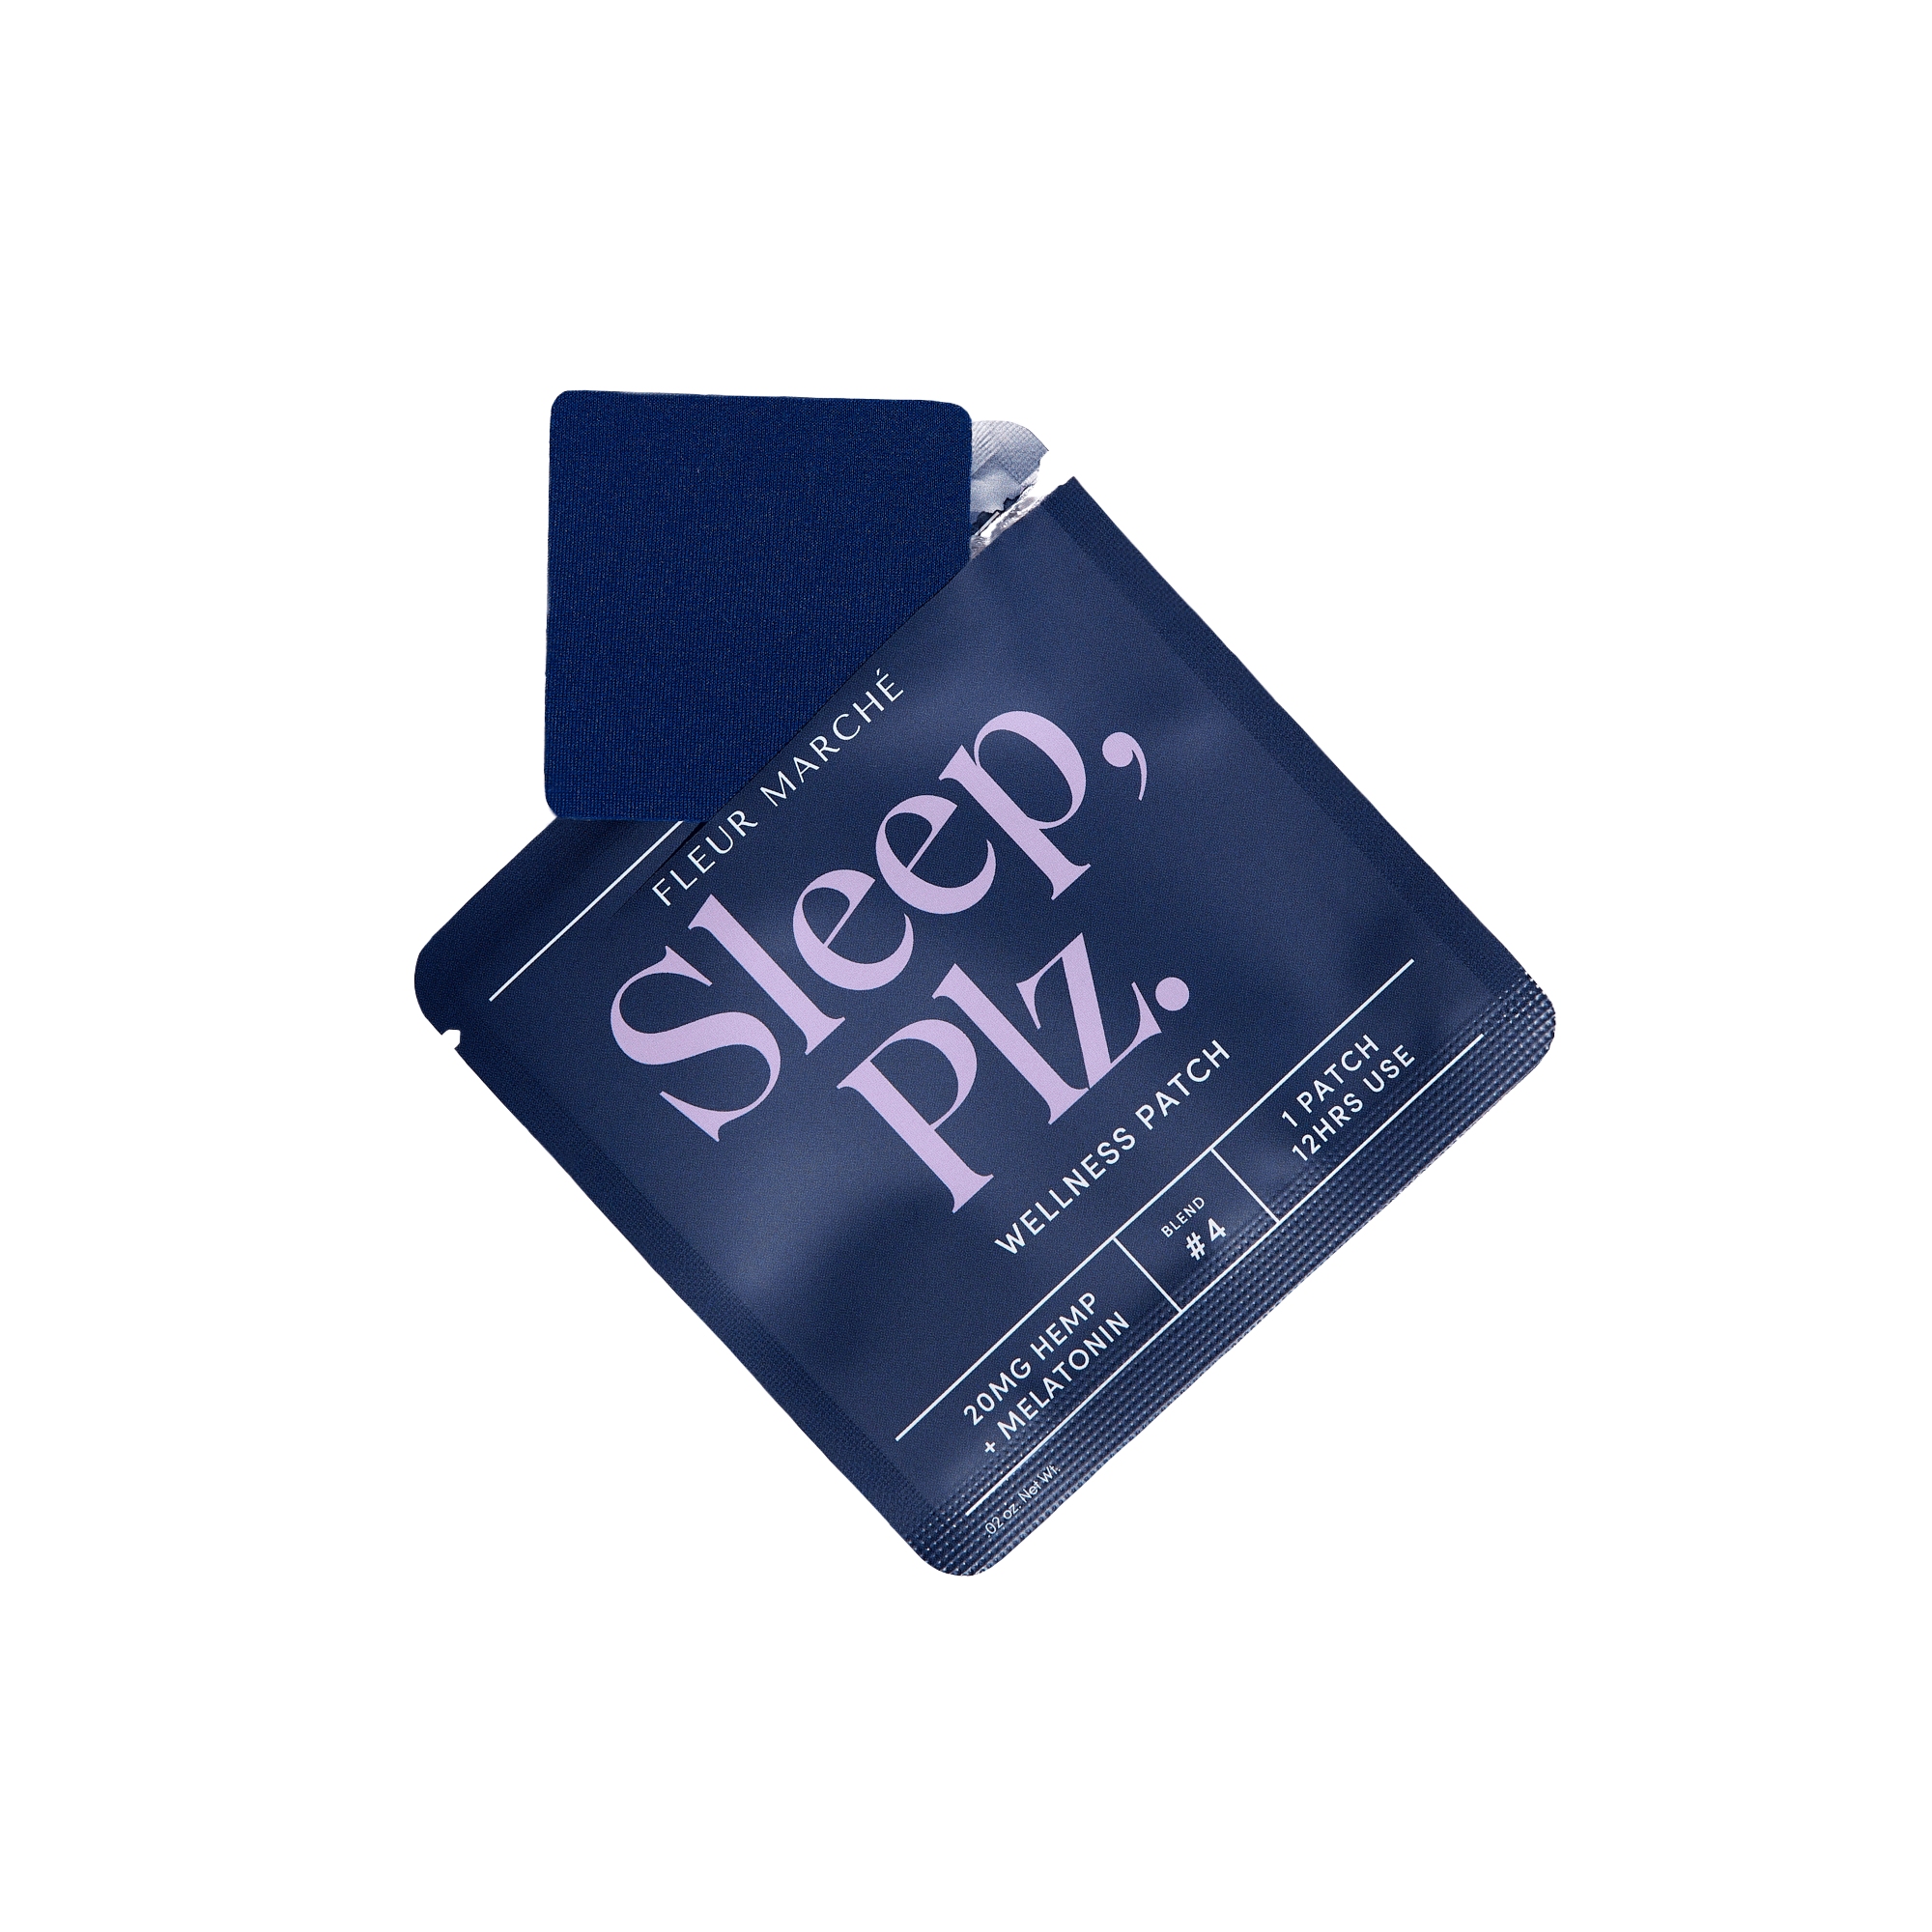 Sleep Plz. patch and sleeve